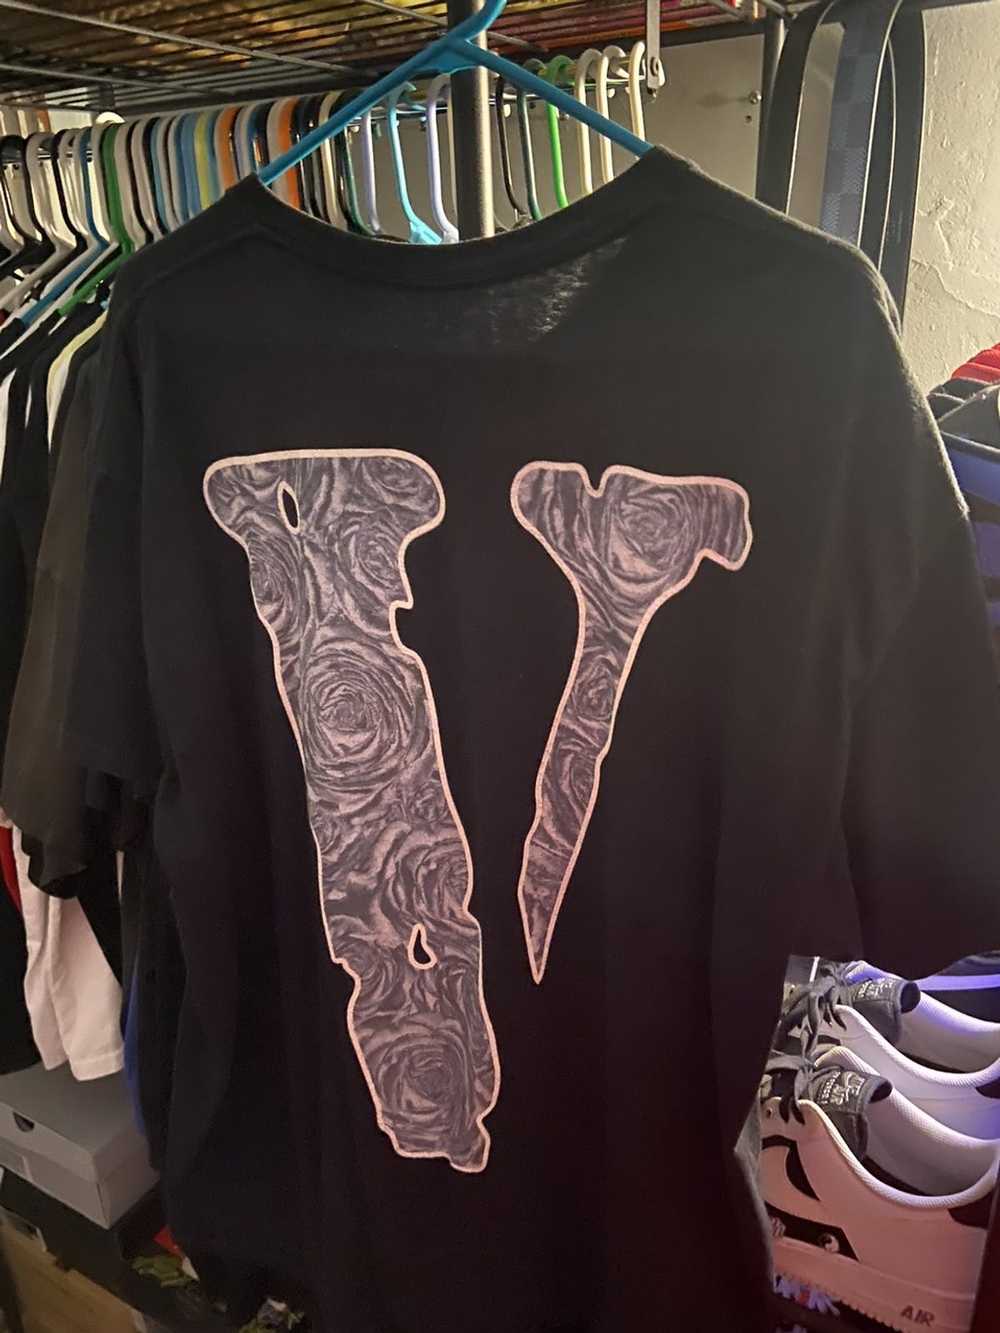 Vlone Vlone x Pop Smoke “THE WOO” t shirt - image 2